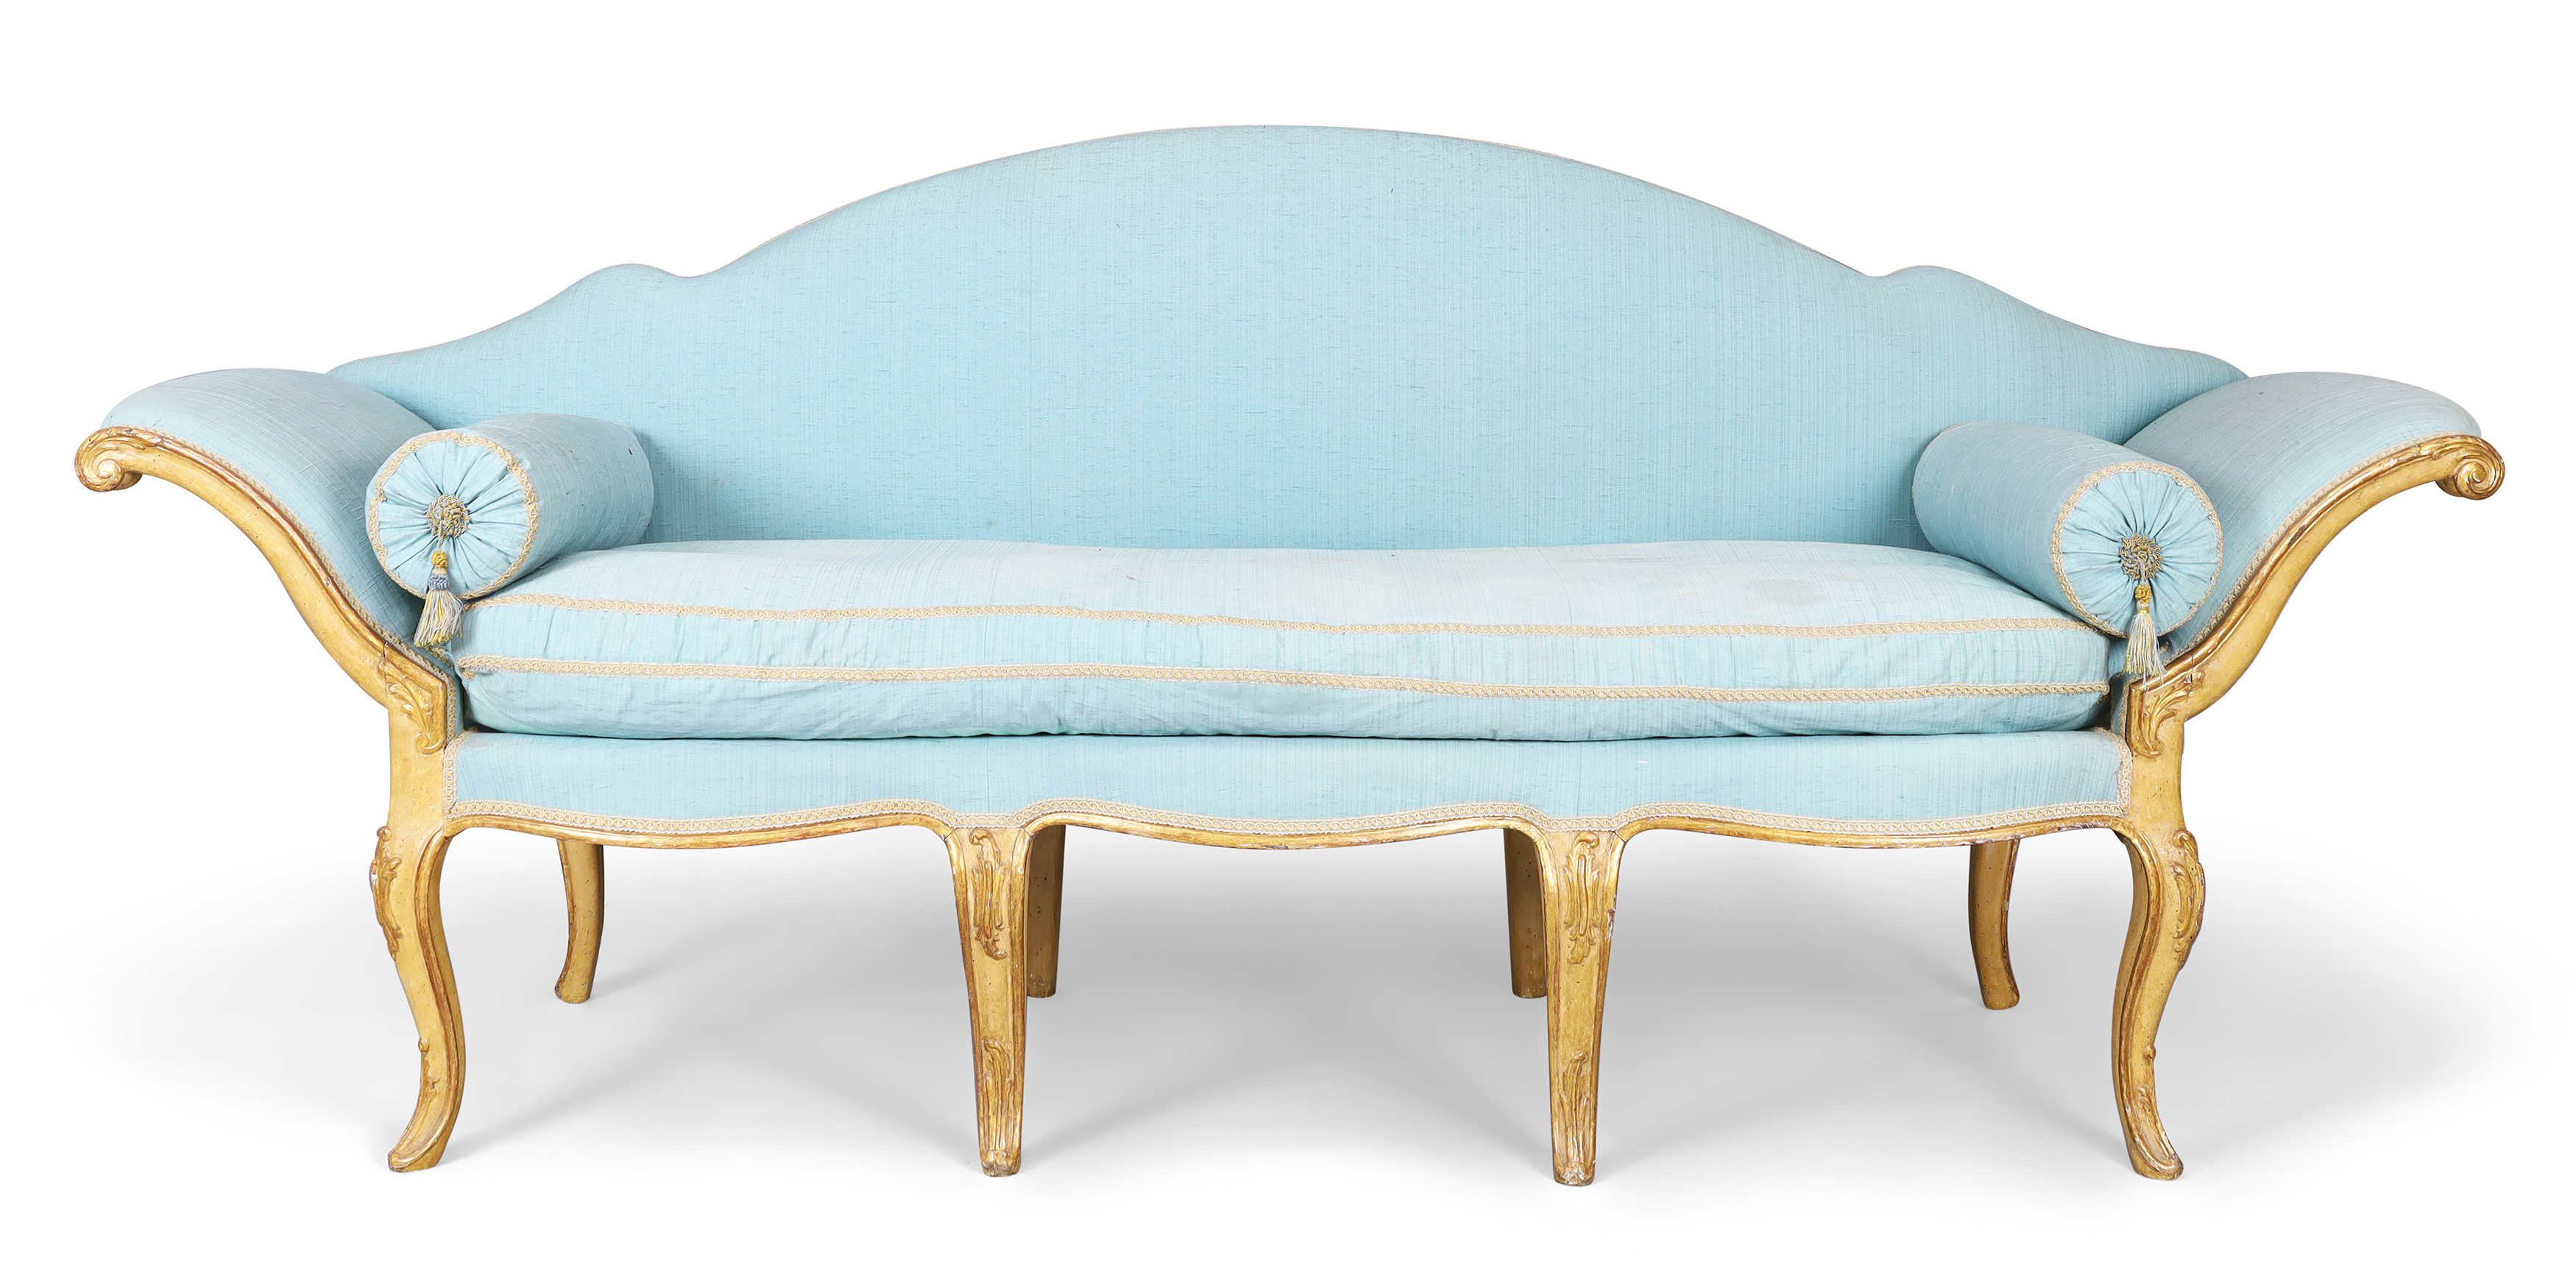 A North Italian parcel-gilt and cream painted sofa, Piedmont, third quarter 18th century, the ser...